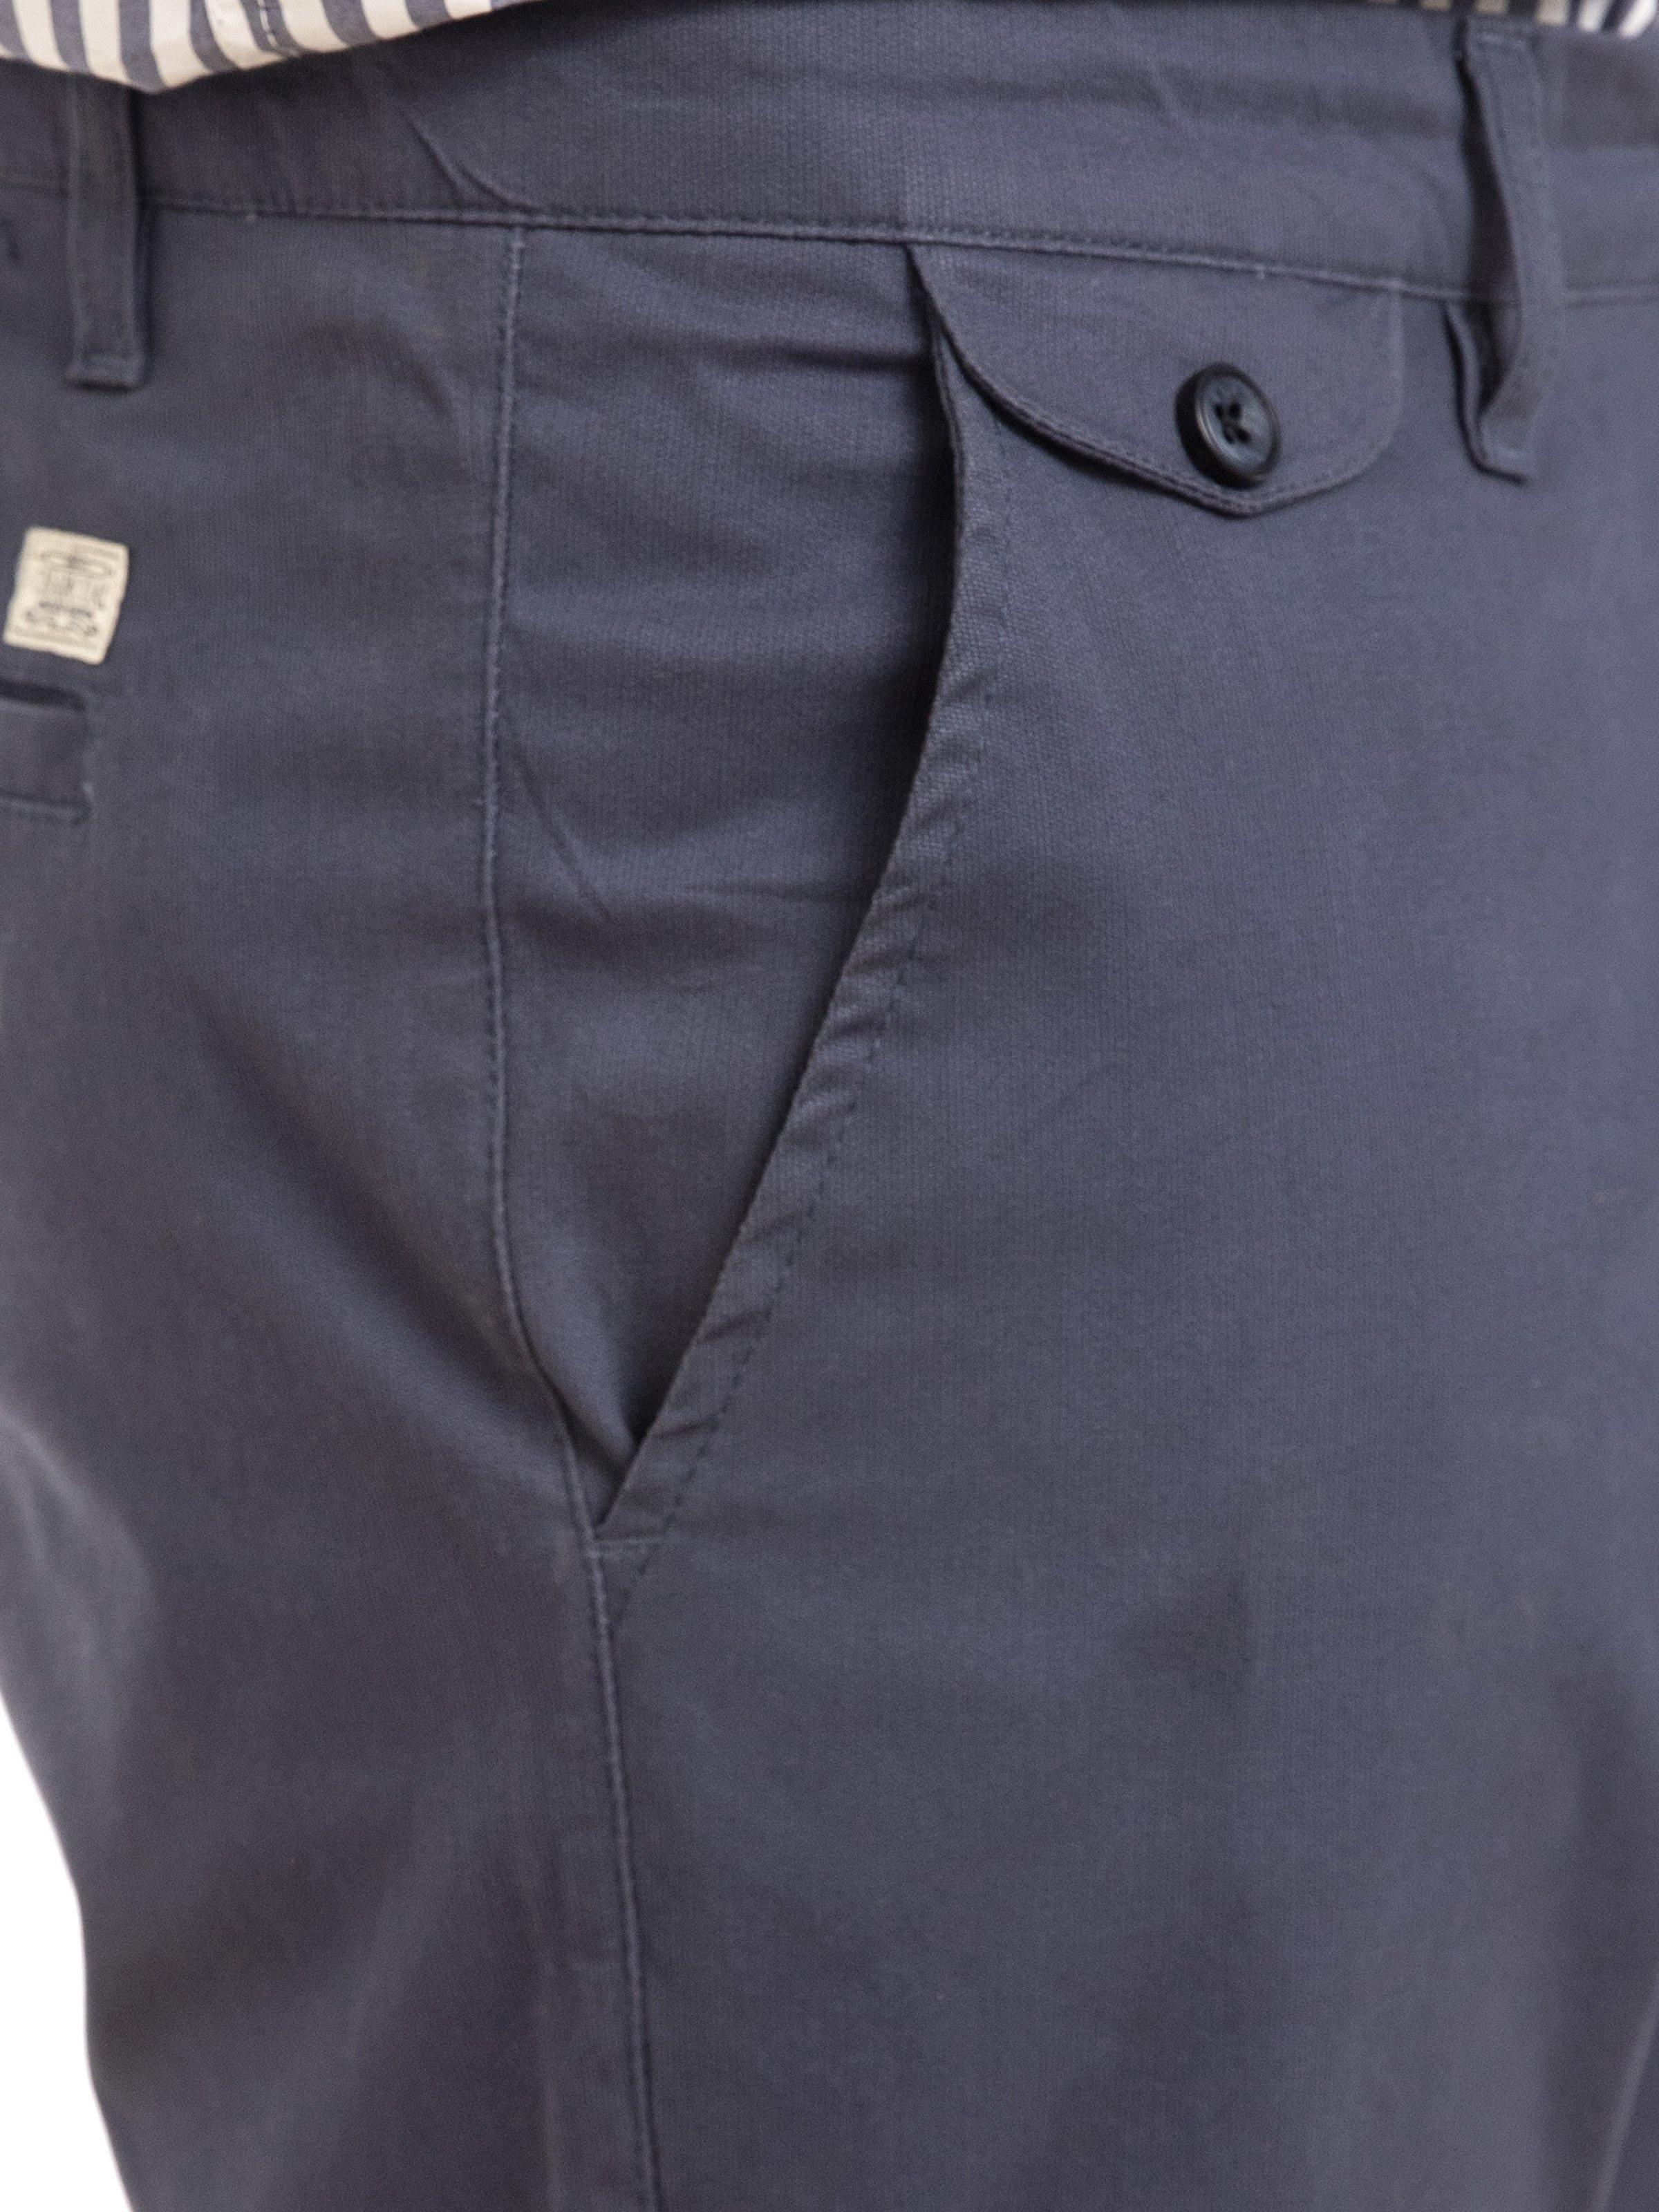 CASUAL PANT CROSS POCKET SLIM FIT DARK BLUE at Charcoal Clothing